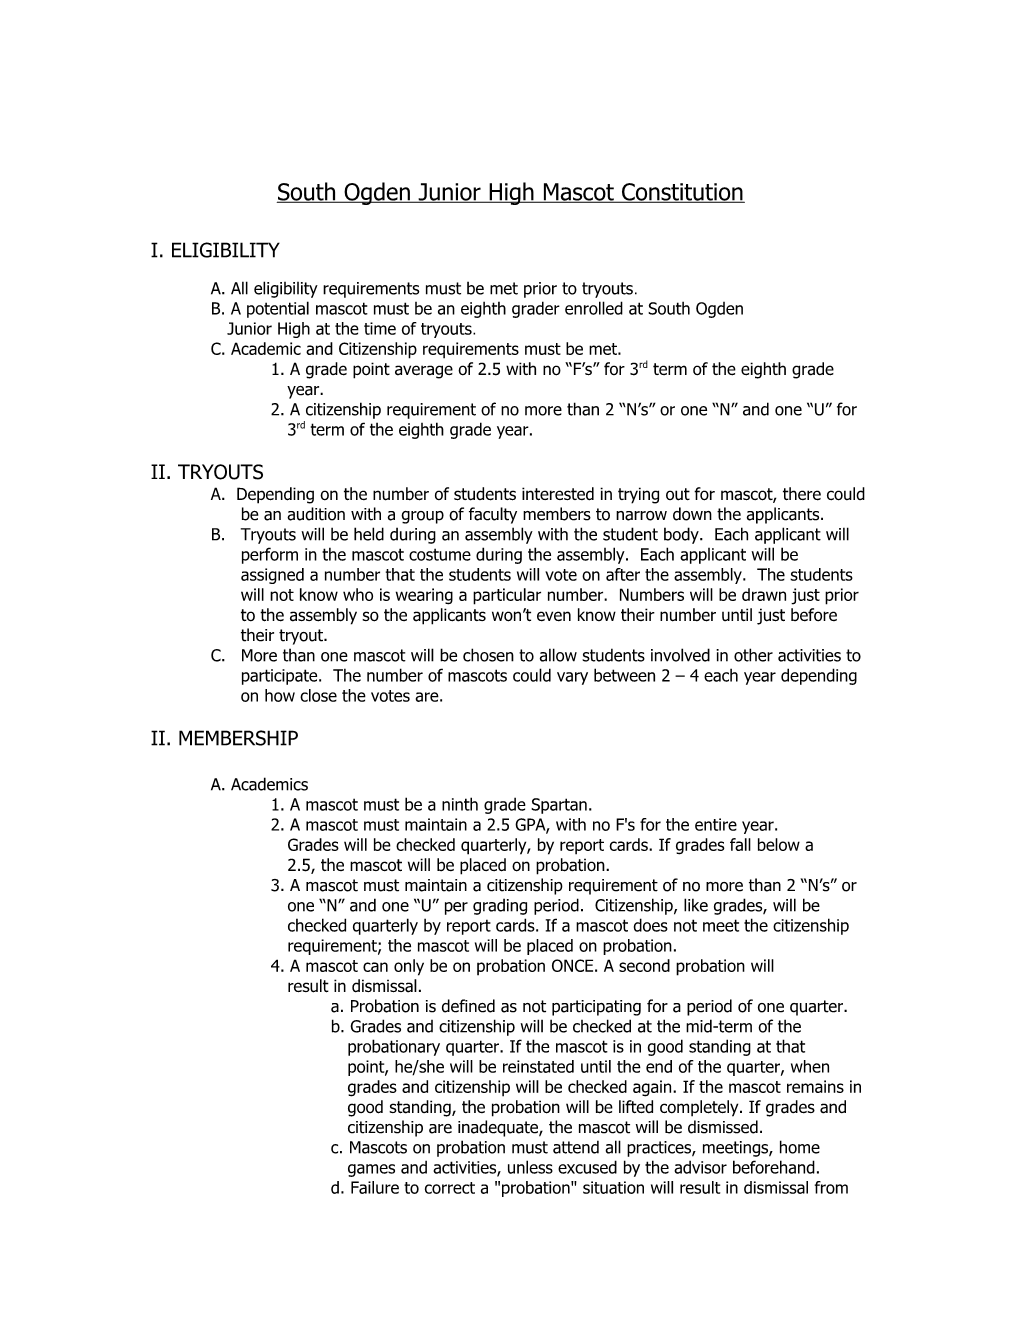 South Ogden Junior High Cheerleading Constitution